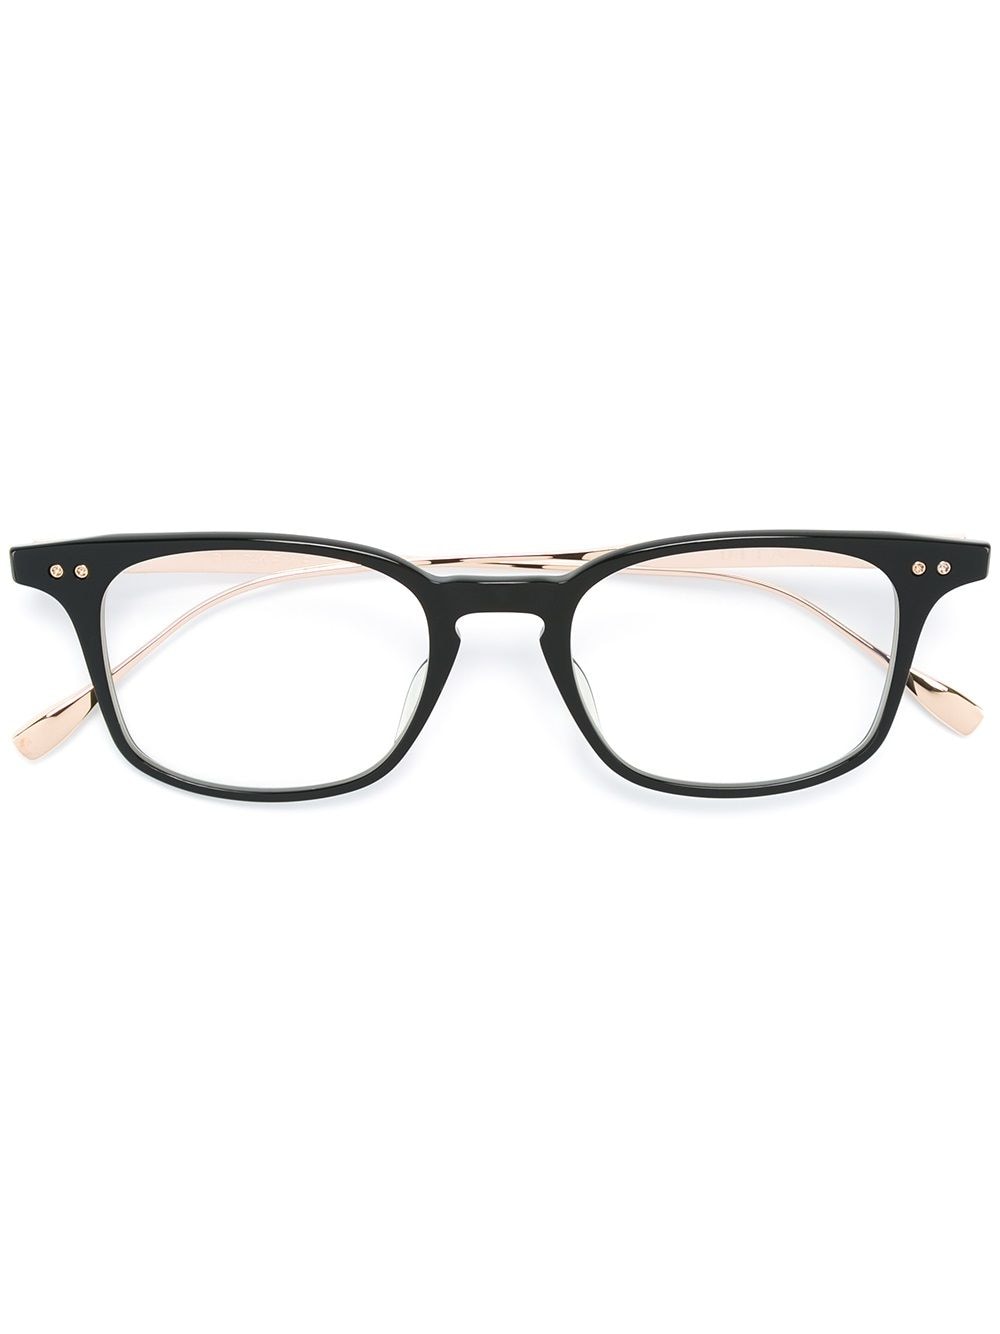 Dita Eyewear 'Buckeye' frames - Black von Dita Eyewear